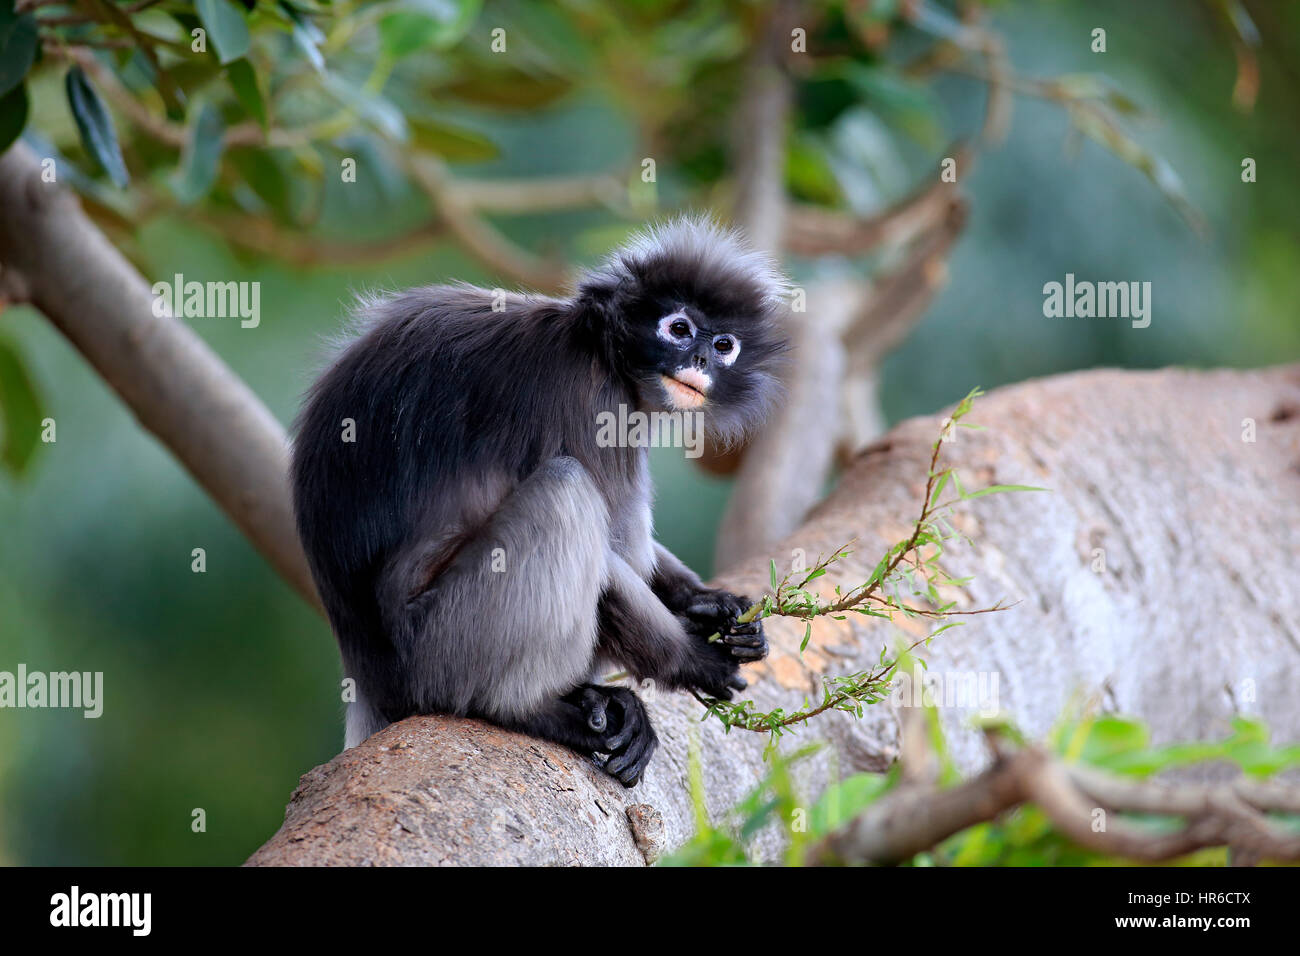 Dusky Leaf Monkey, (Trachypithecus obscurus), Presbytis obscura, adult on tree, Asia Stock Photo